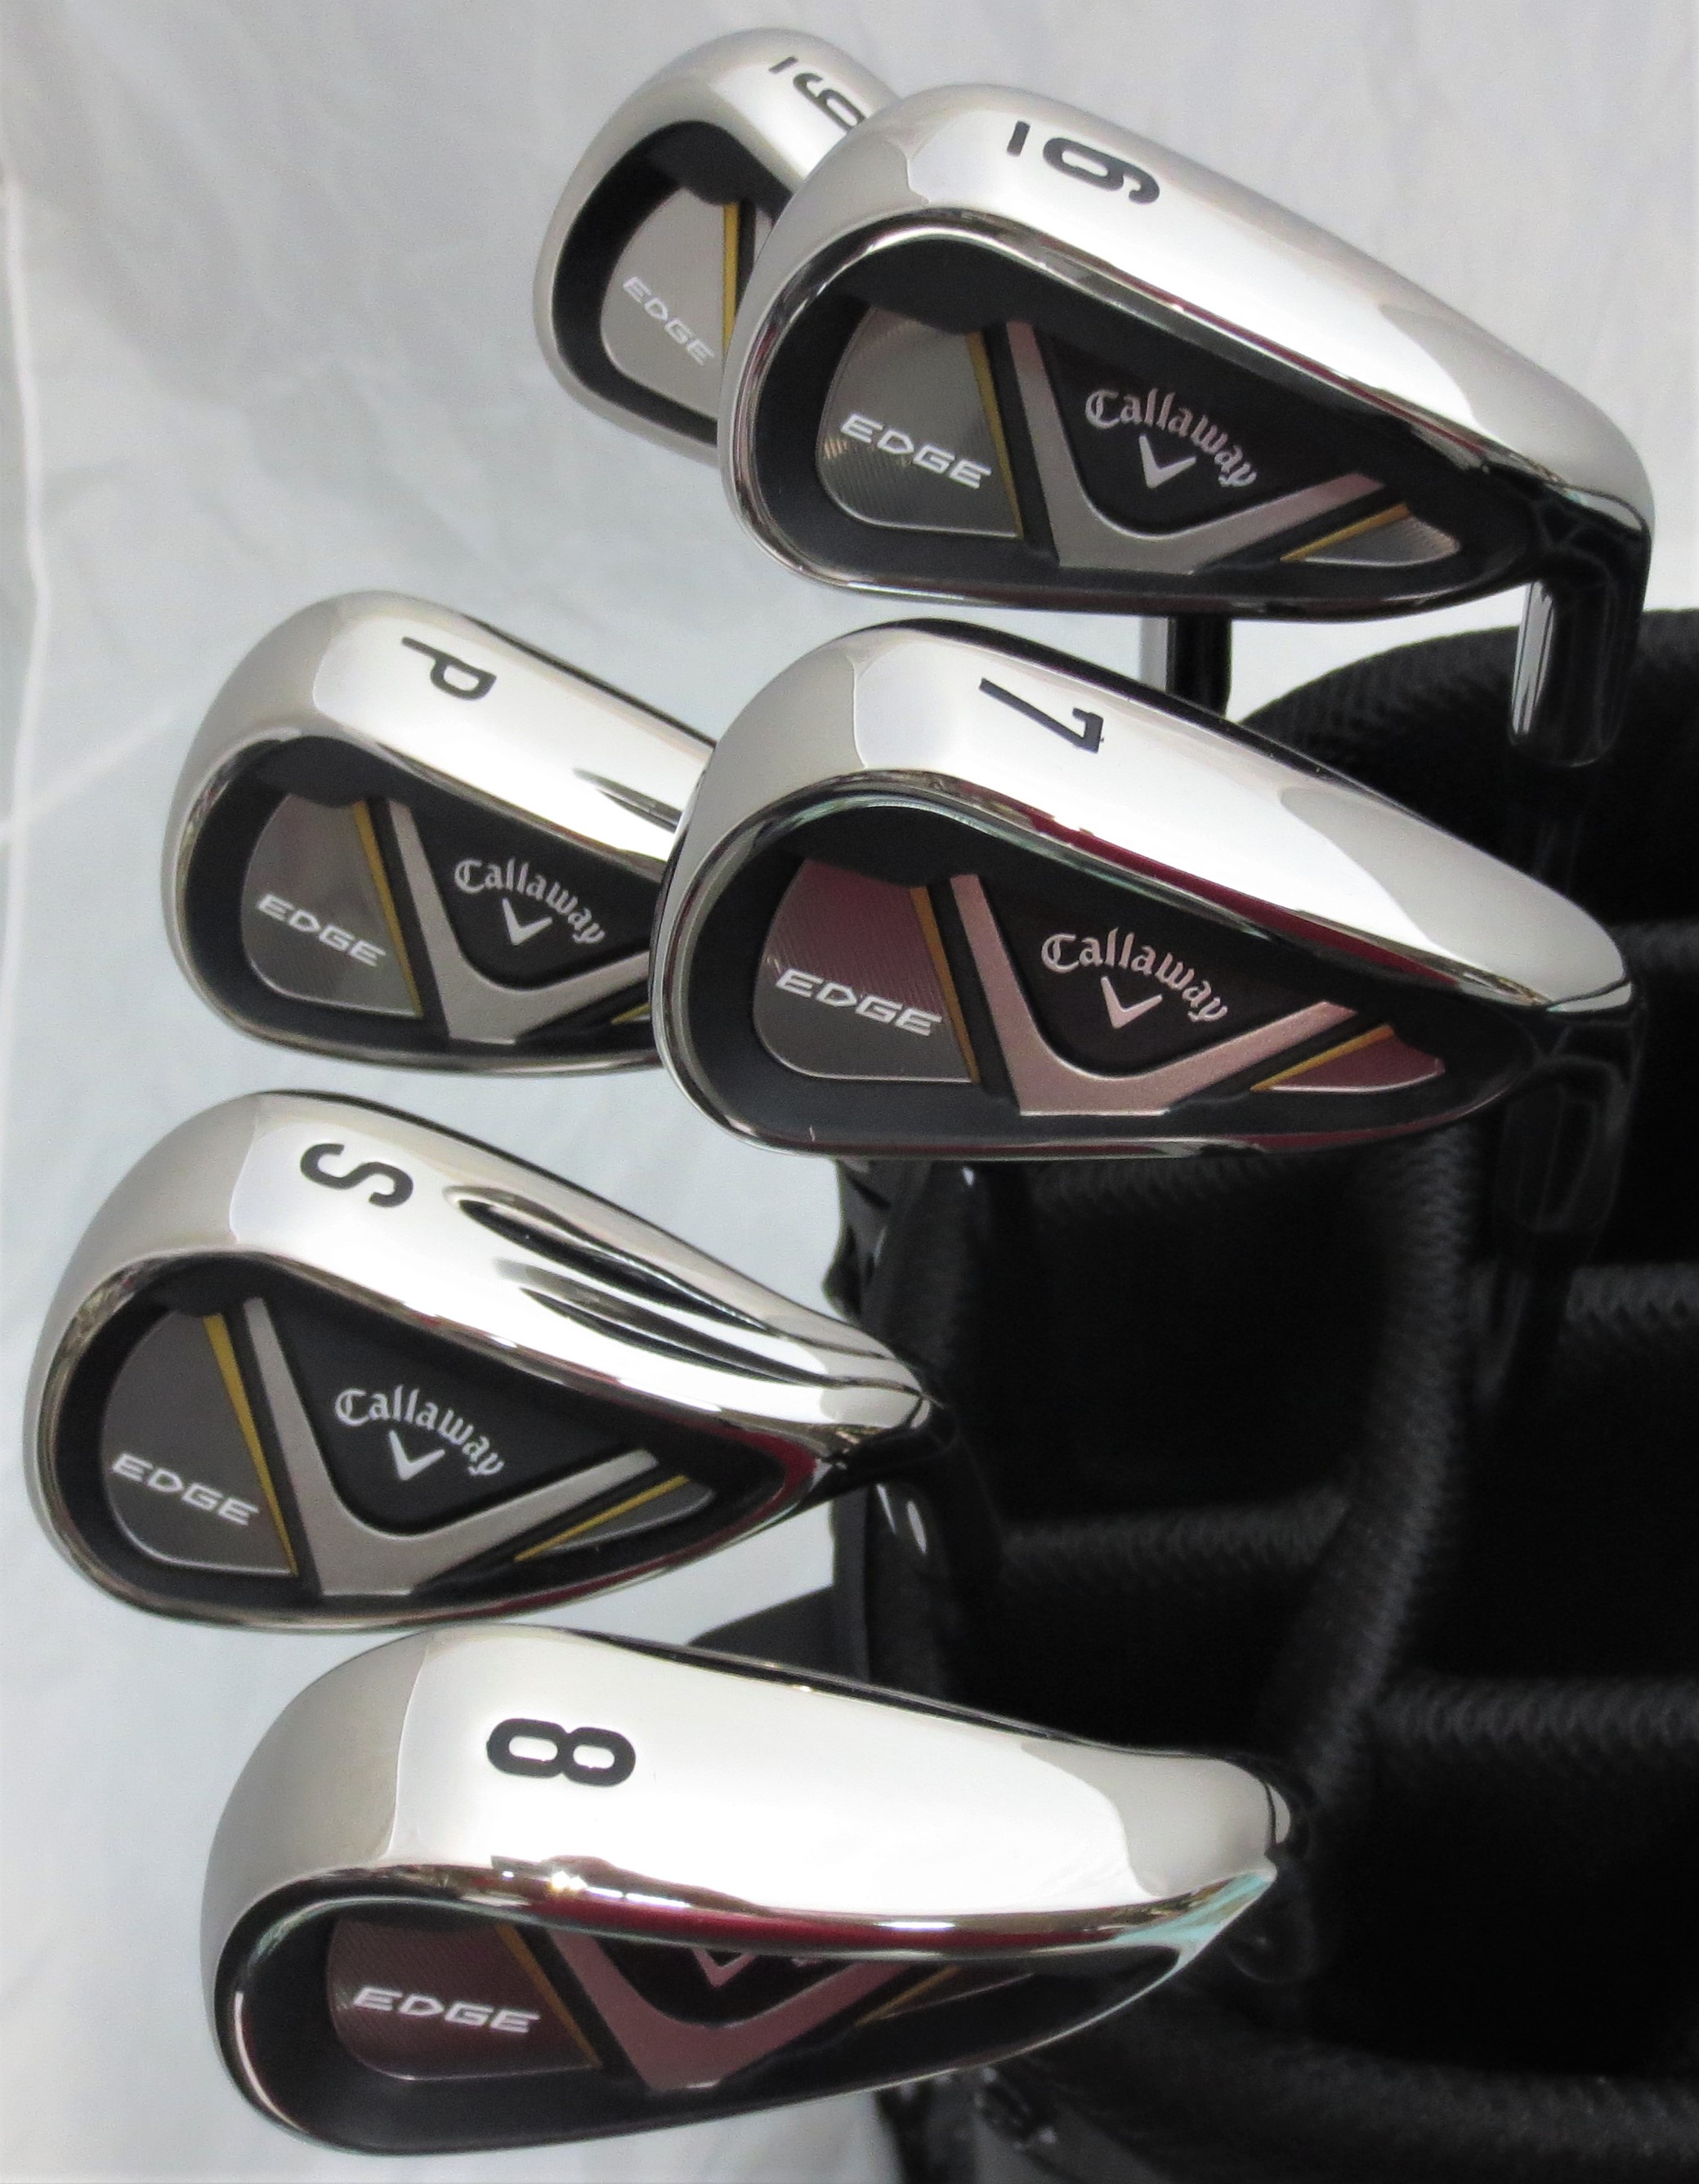 Callaway Complete Mens Golf Set Clubs Driver, Fairway Wood, Hybrid, Irons, Putter, Bag Stiff Flex Shafts - image 5 of 8